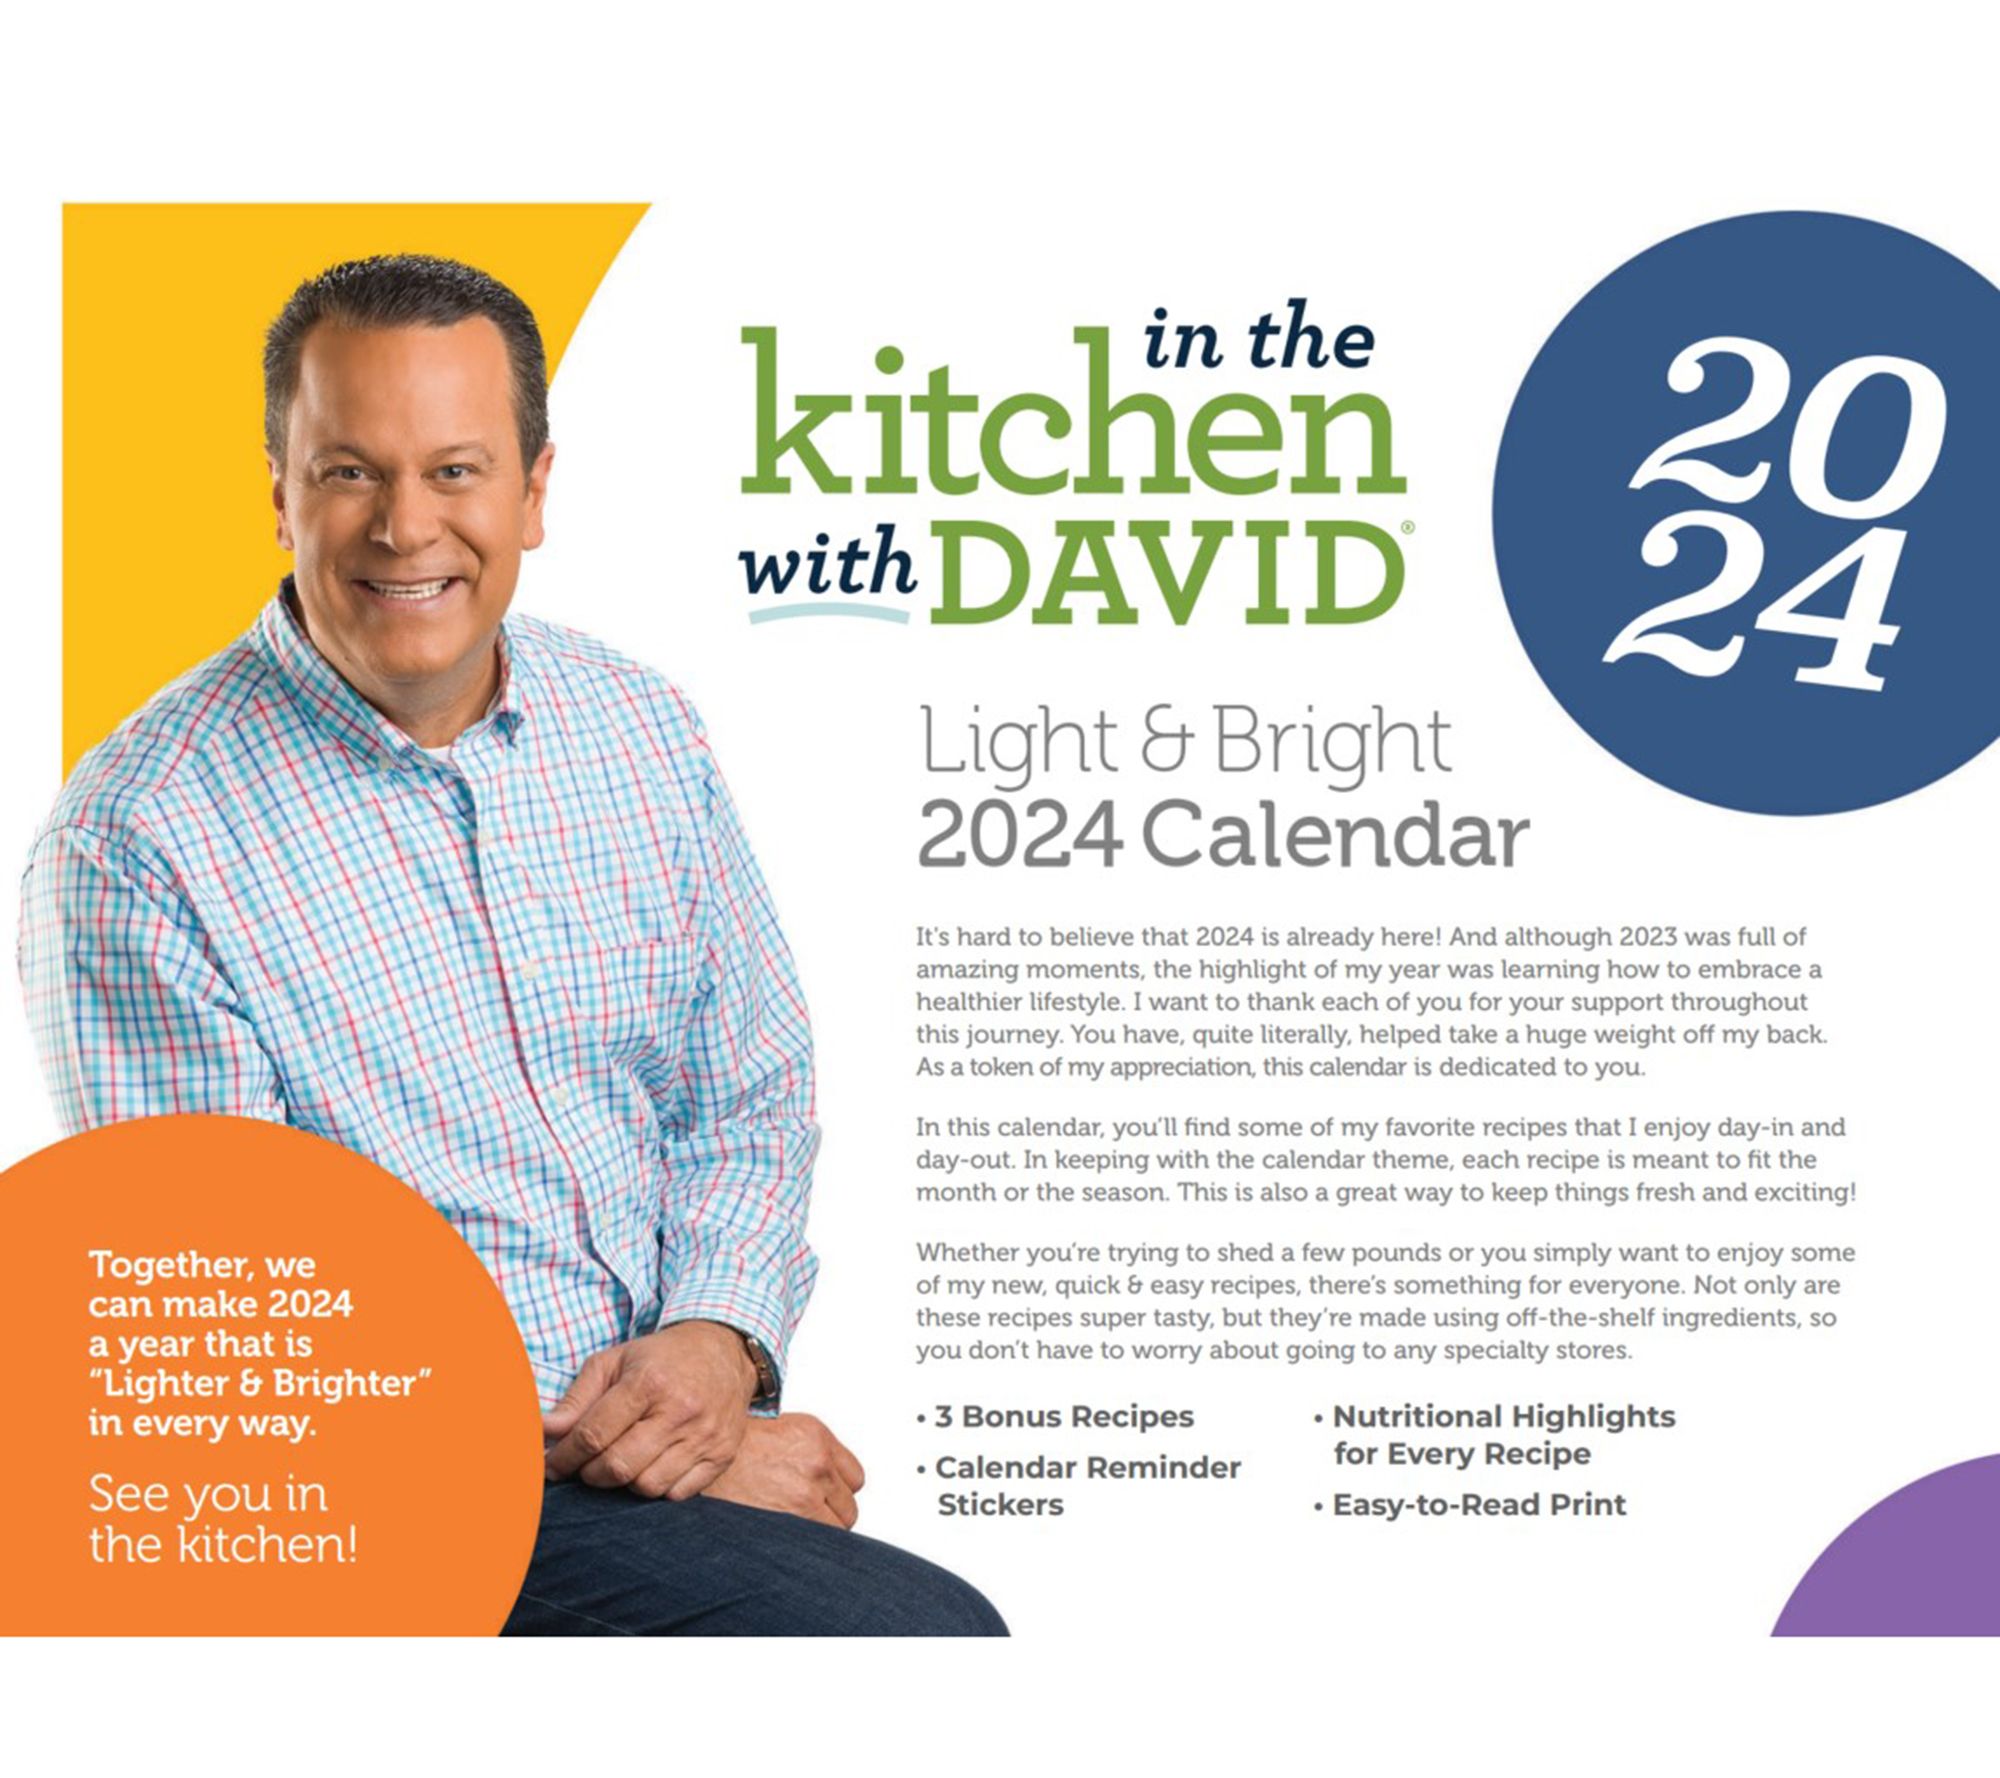 Bright　Calendar　David　In　with　Kitchen　the　Recipe　Light　2024